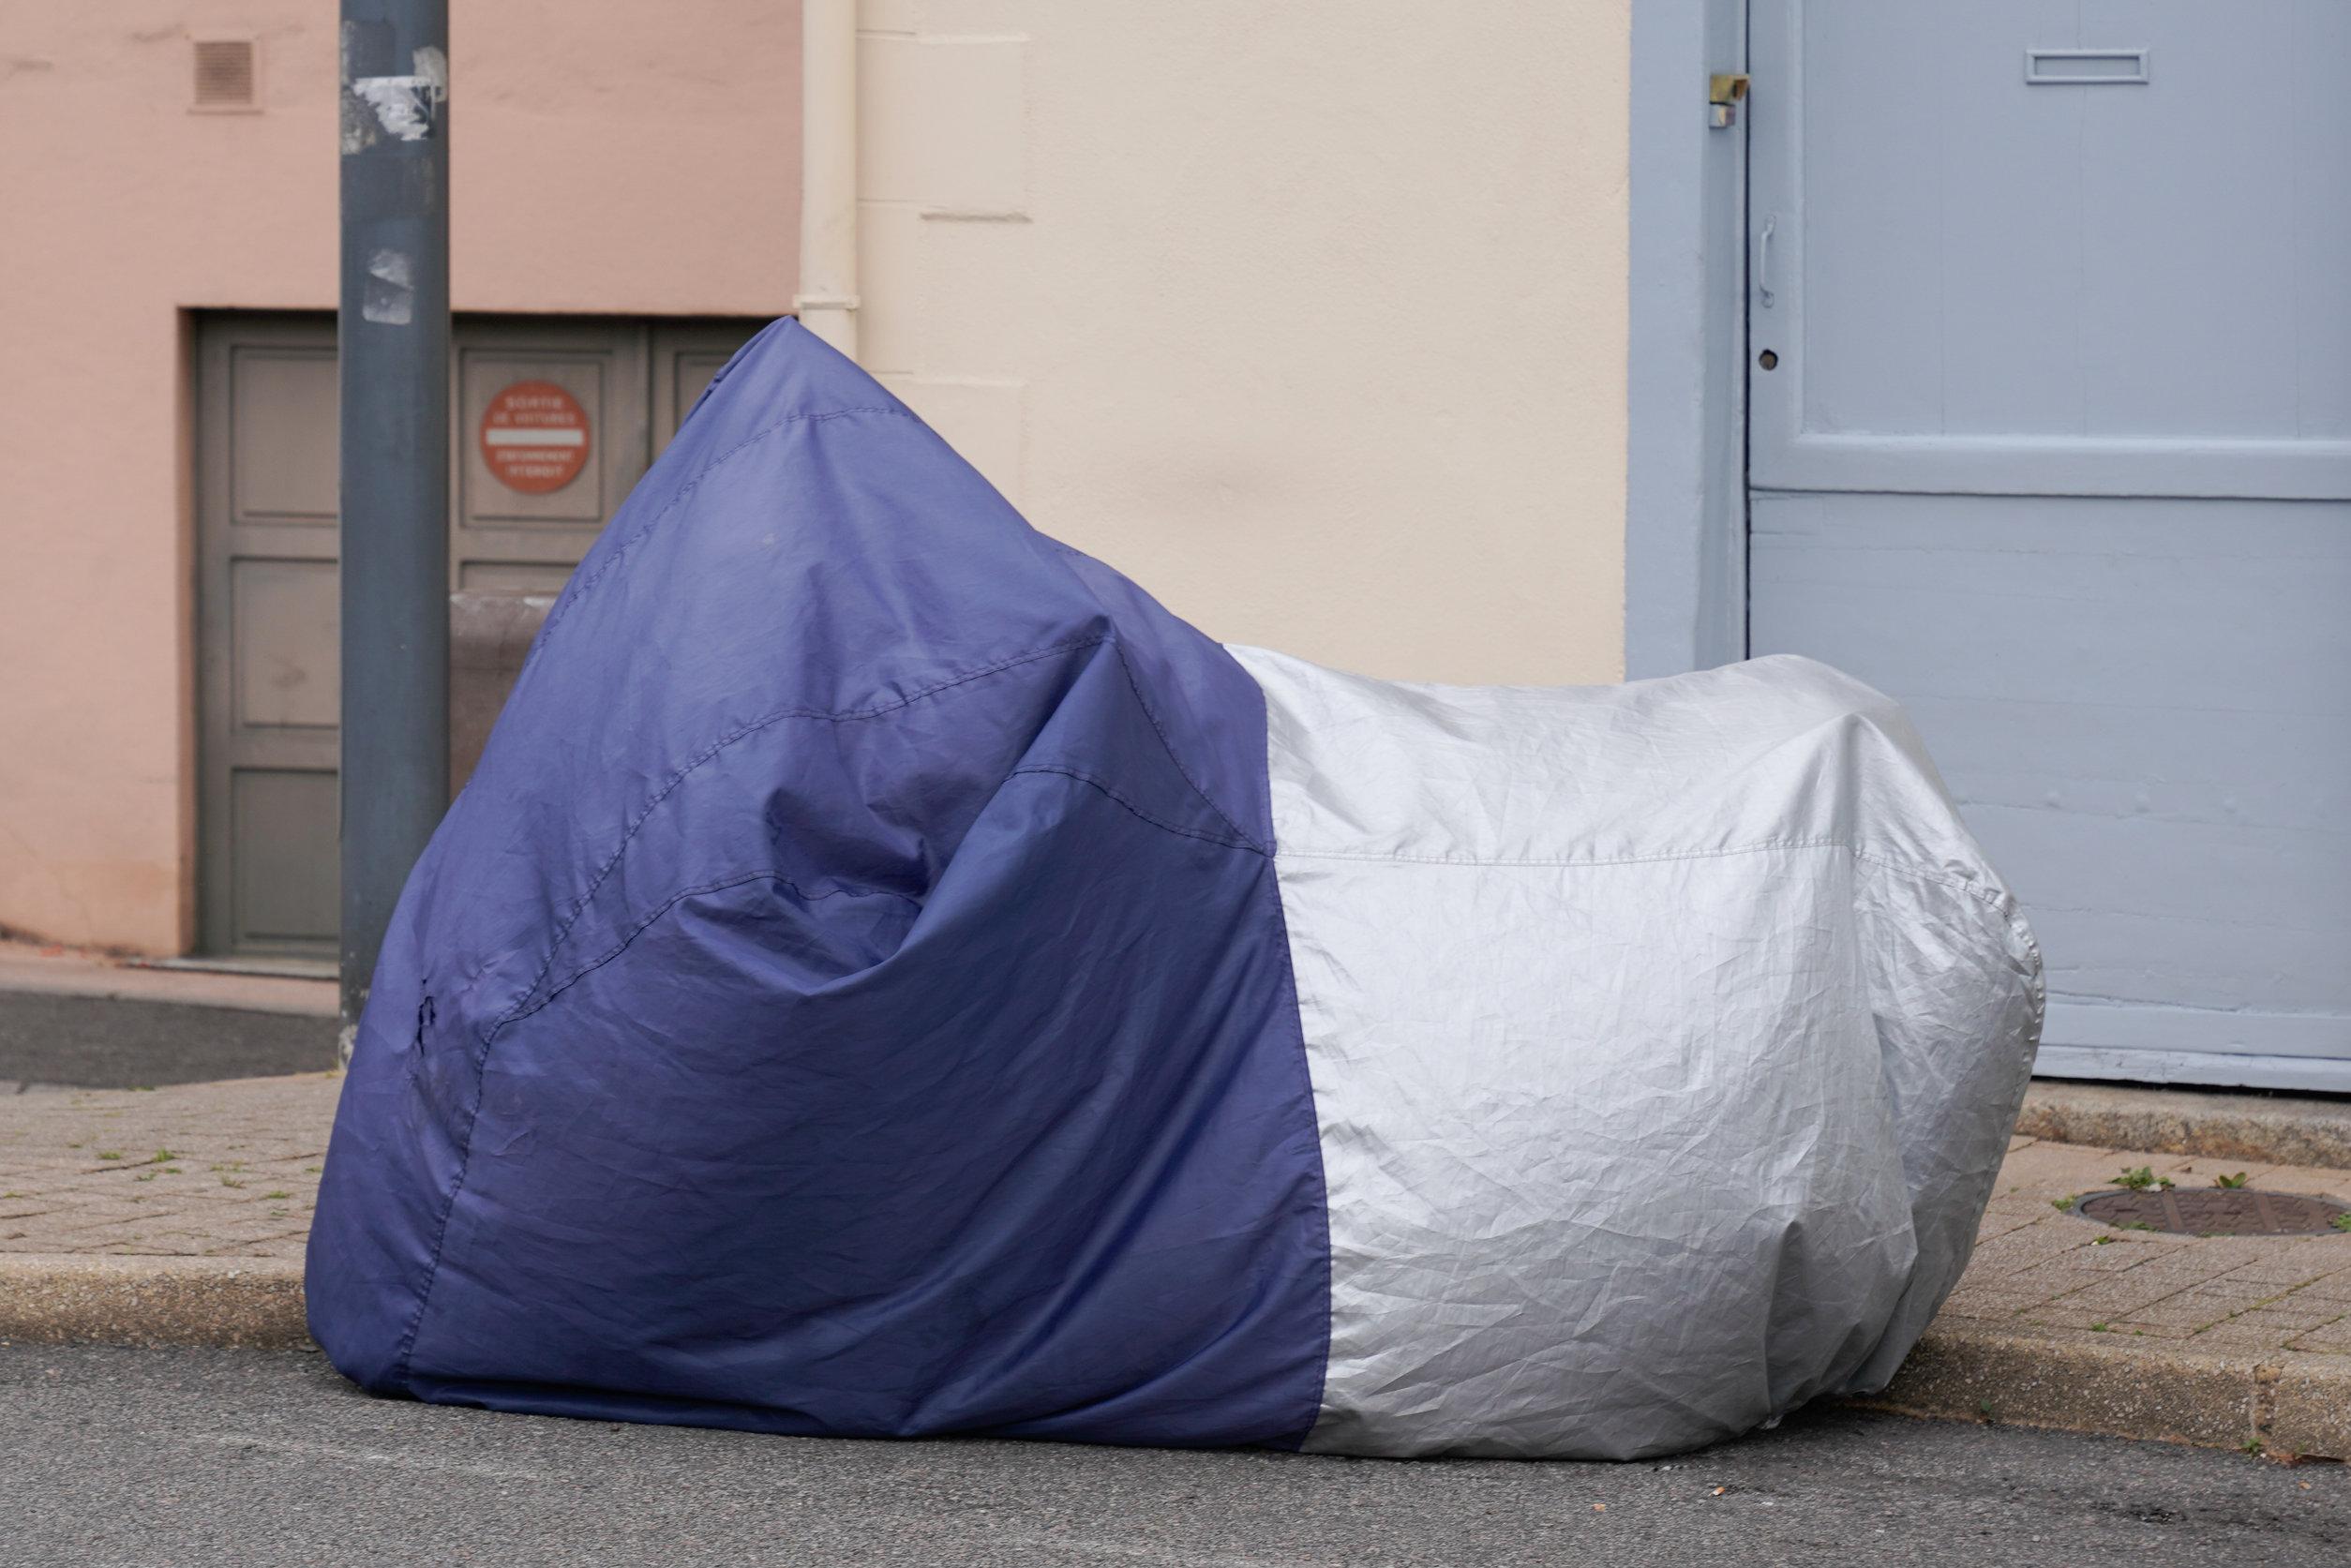 Moto coperta da un telo in strada: è legale?